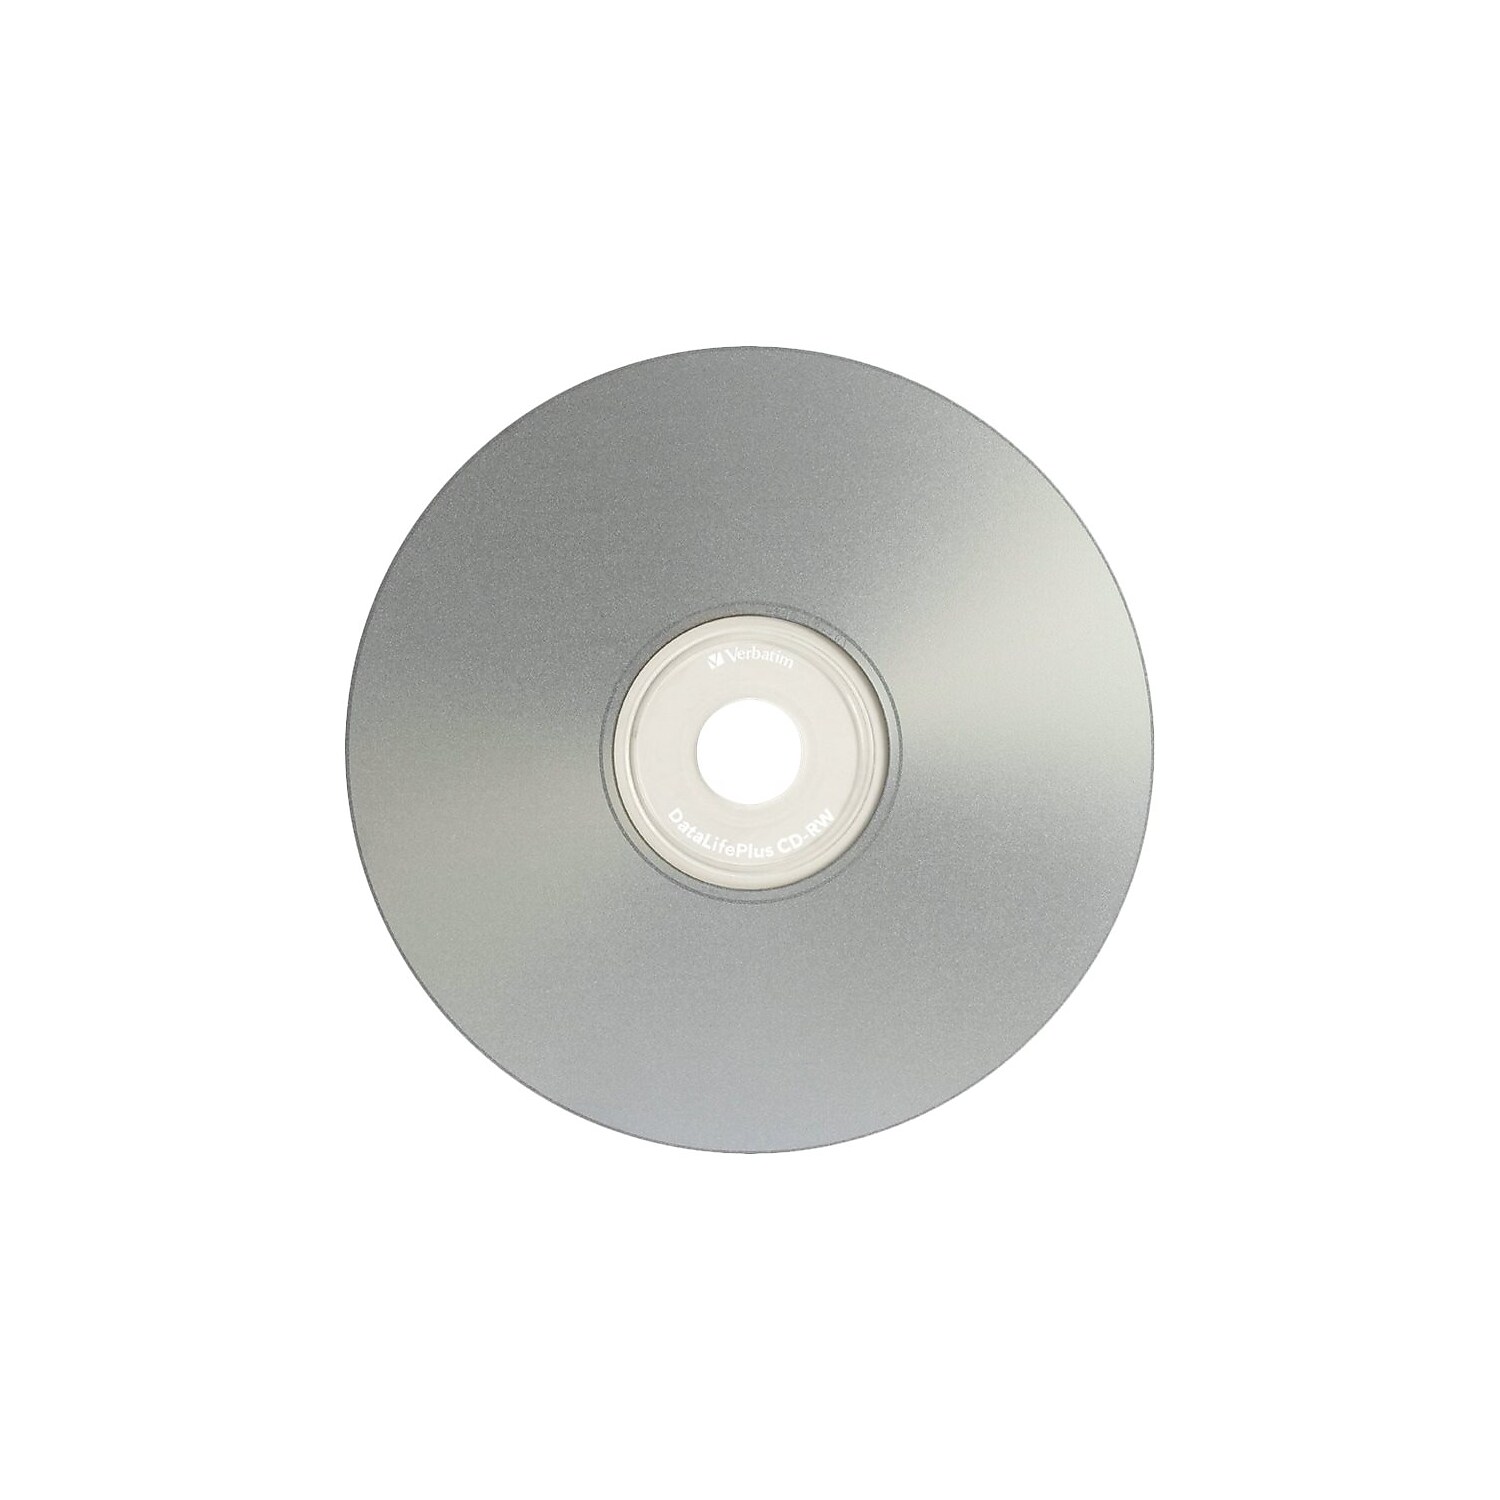 Verbatim DataLifePlus 700MB 2X - 4X CD-RW 50 Packs Spindle Media Model 95159 - image 3 of 4